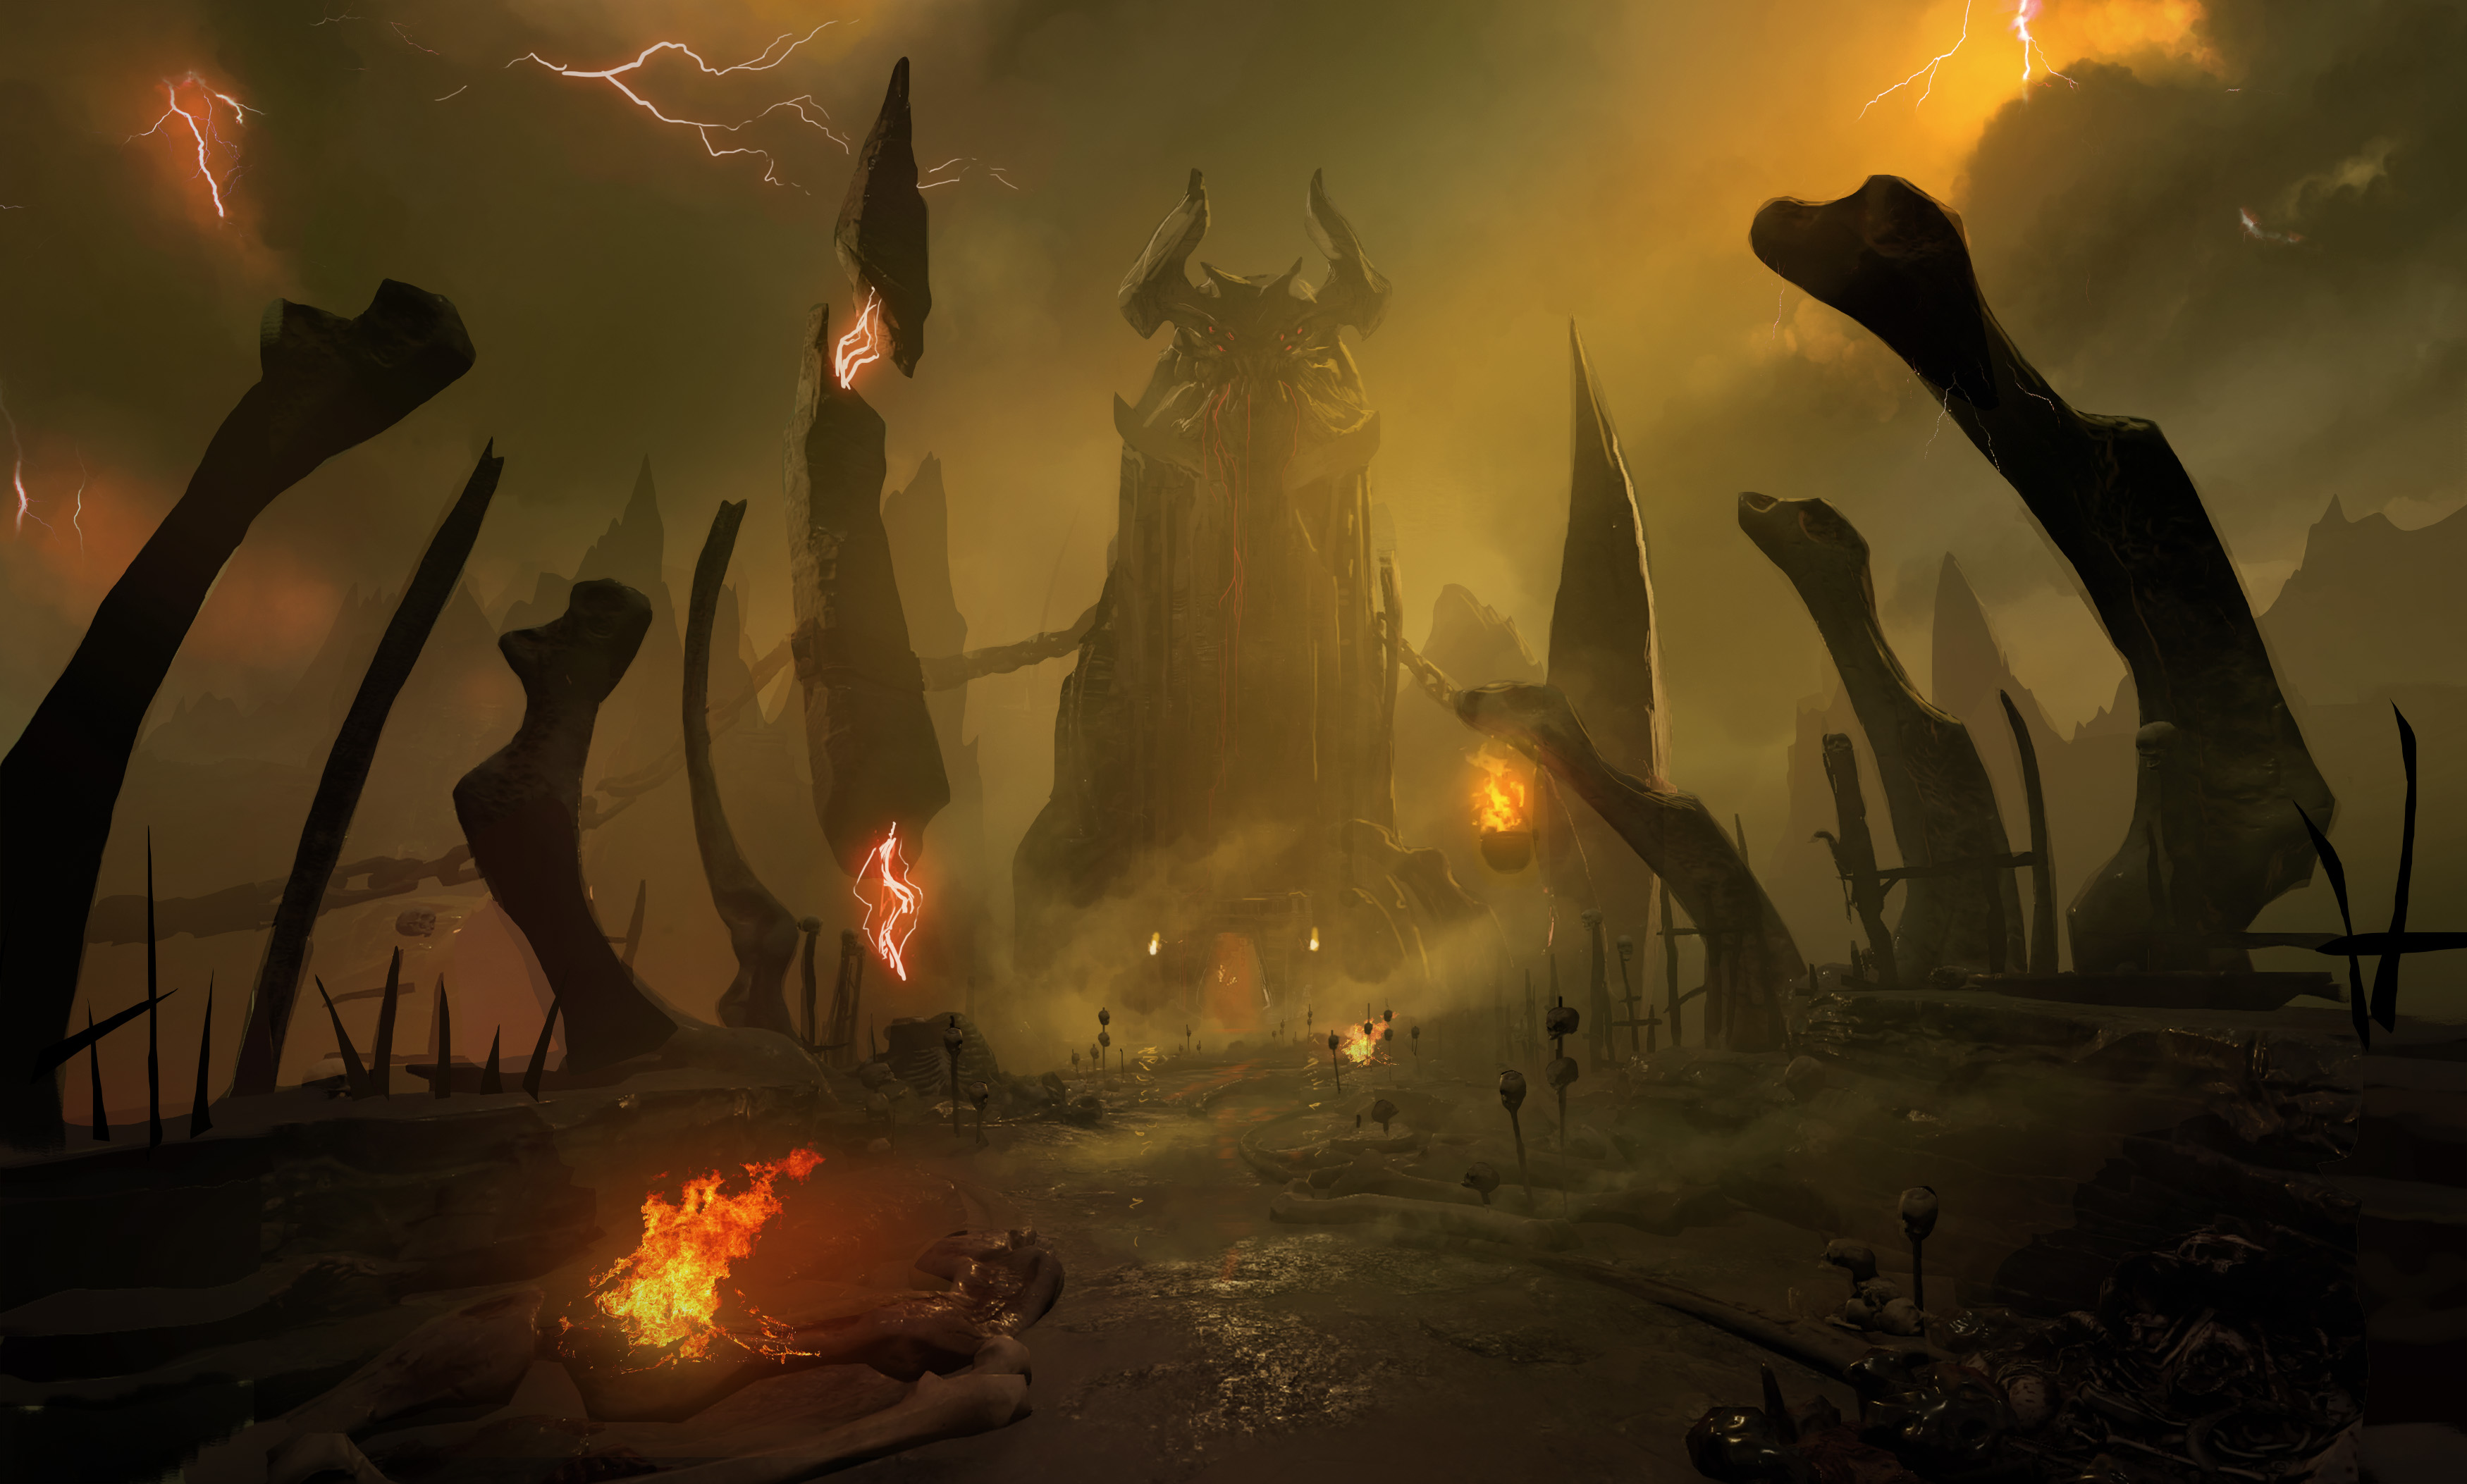 Hell village. Doom 2016 концепт арт. Концепты Doom 2016.